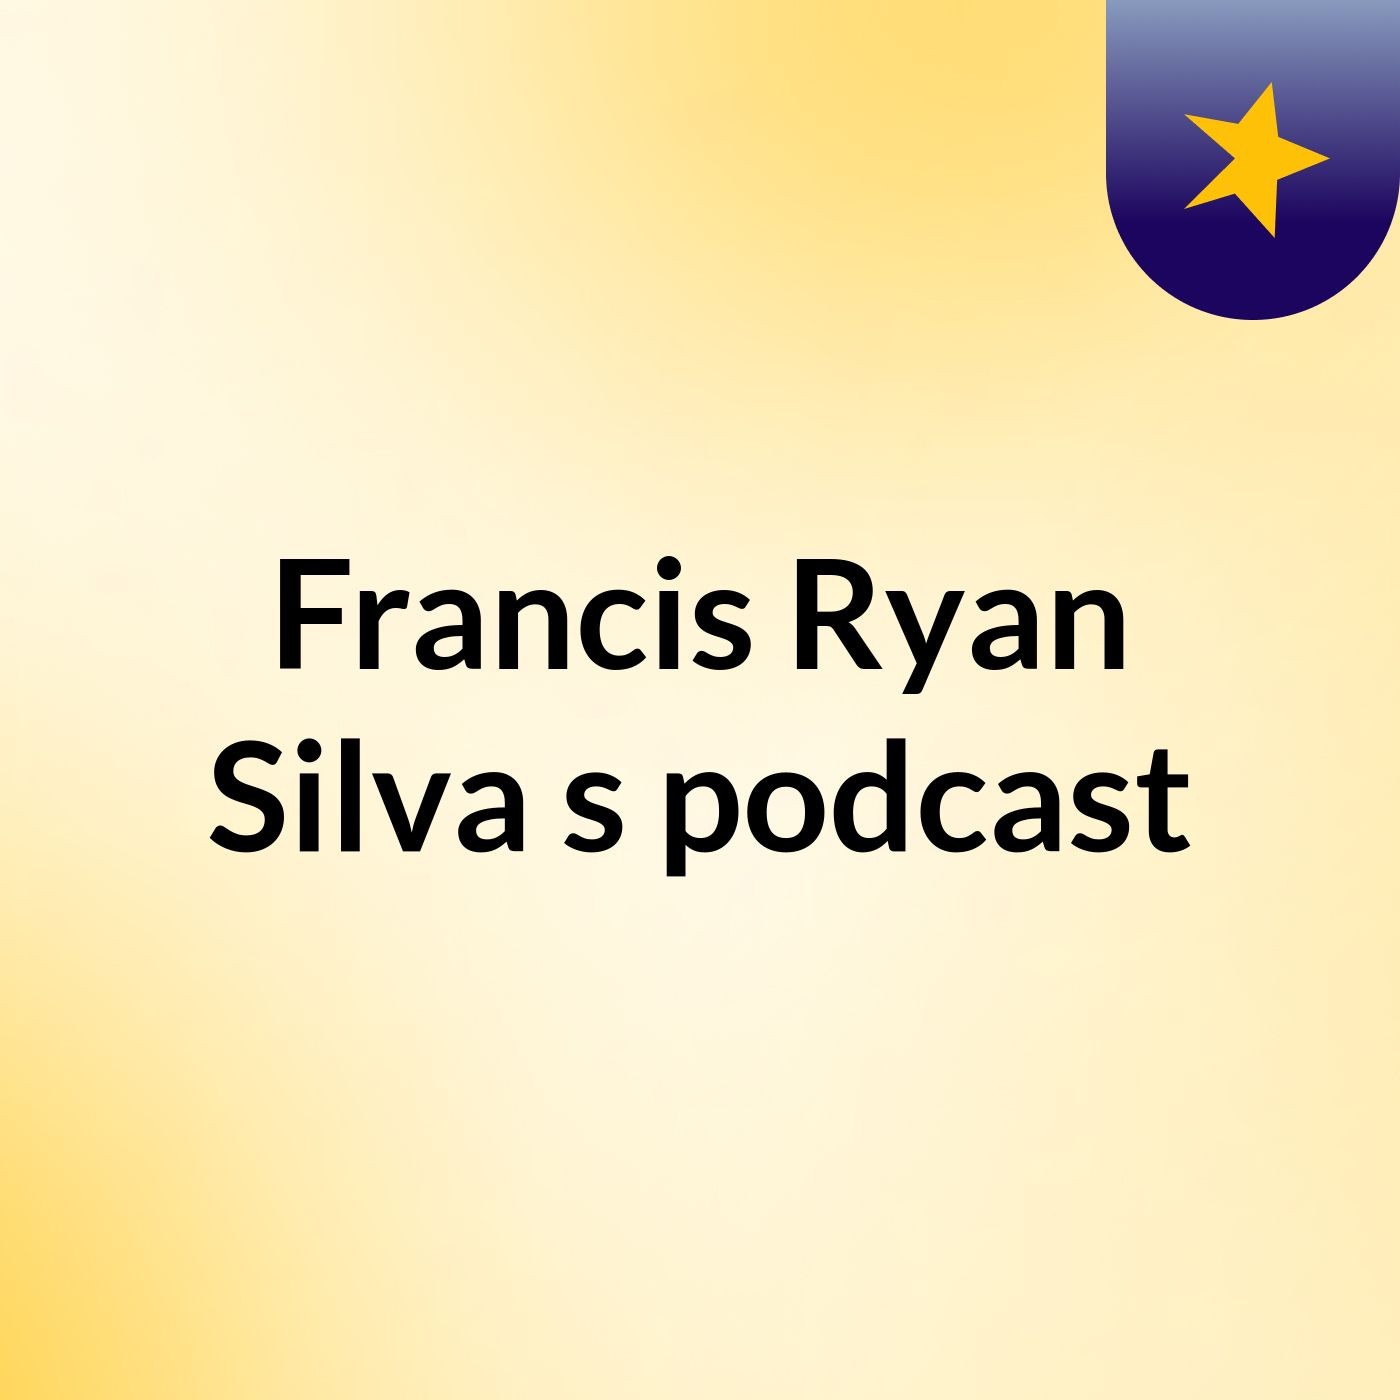 Francis Ryan Silva's podcast